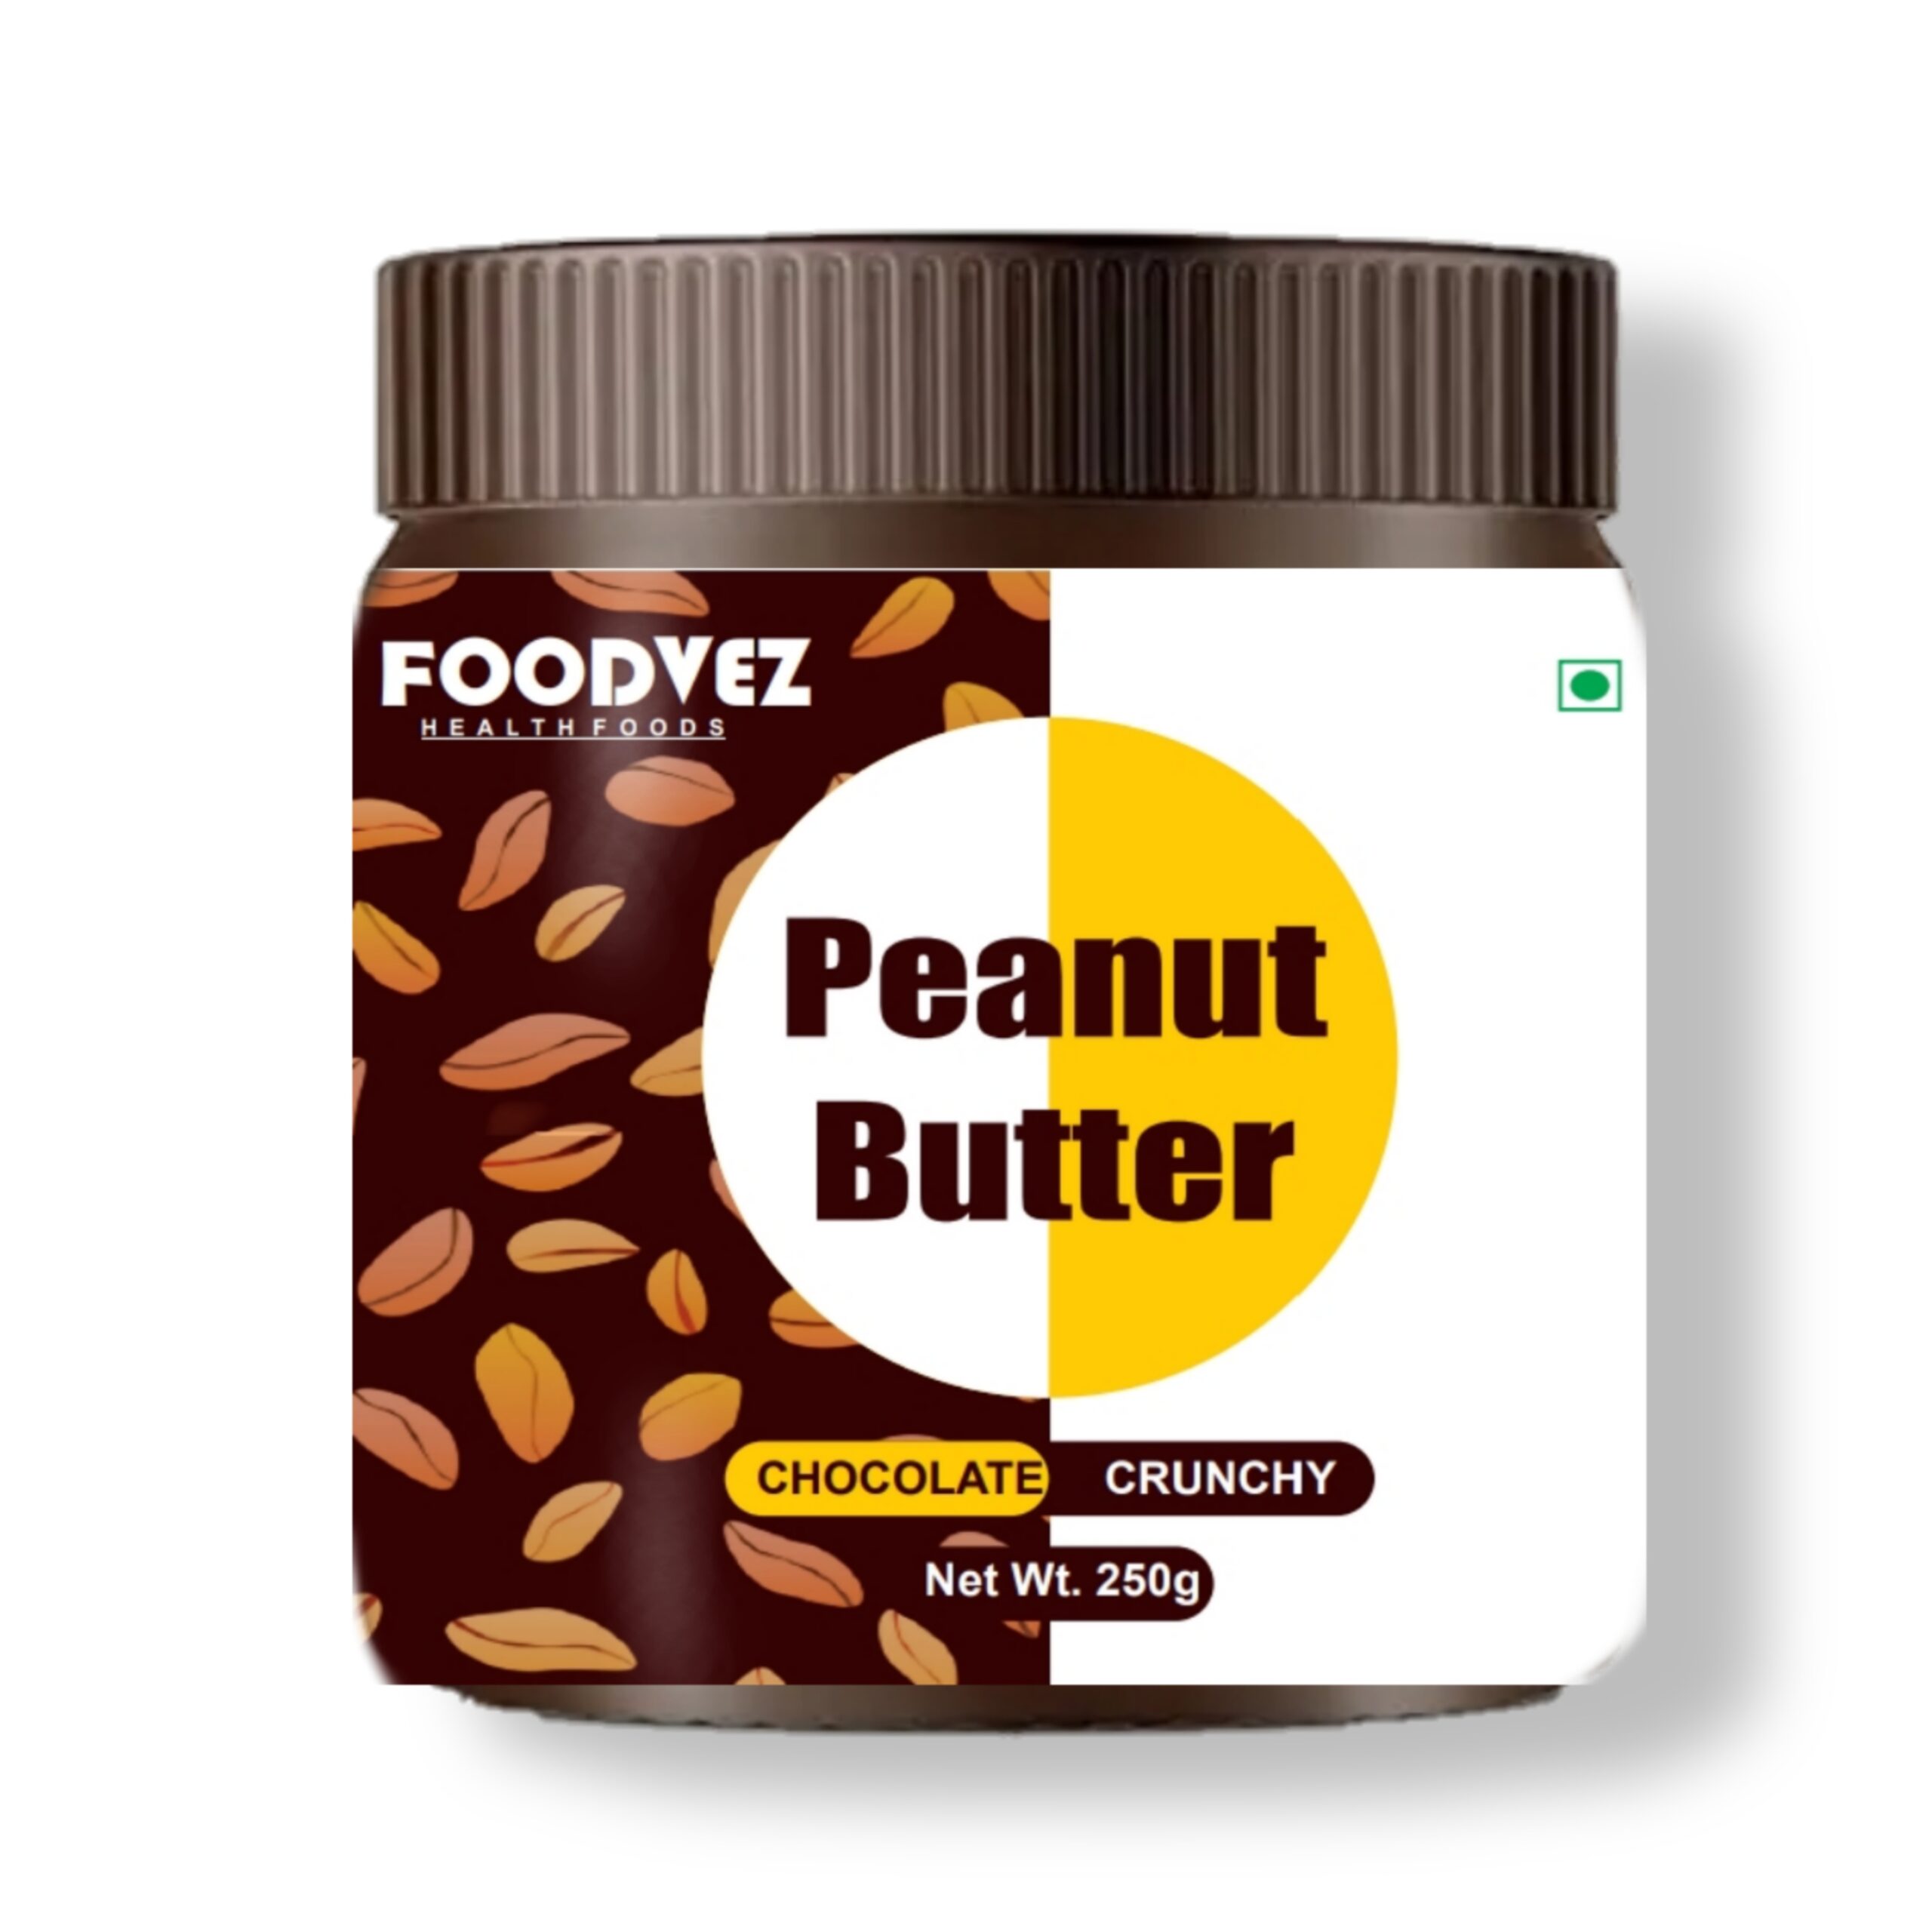 Foodvez Chocolate Crunchy Peanut Butter 250g